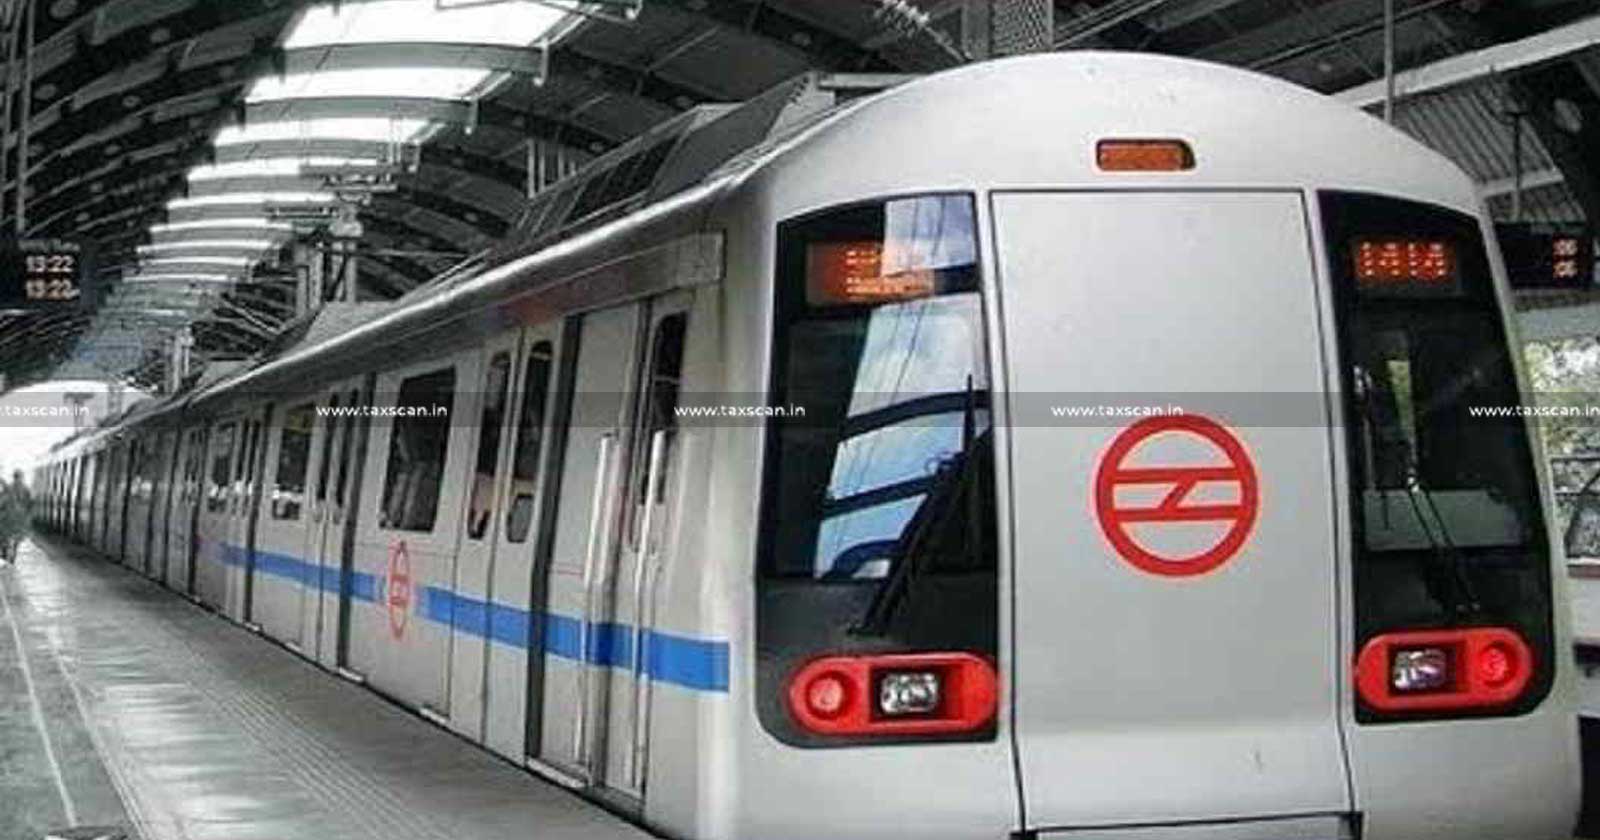 GST - Delhi Metro Rail Corporation - Service of Project Report for Surat Municipal Corporation - Refund - CGST Act - GST - Delhi Highcourt - taxscan